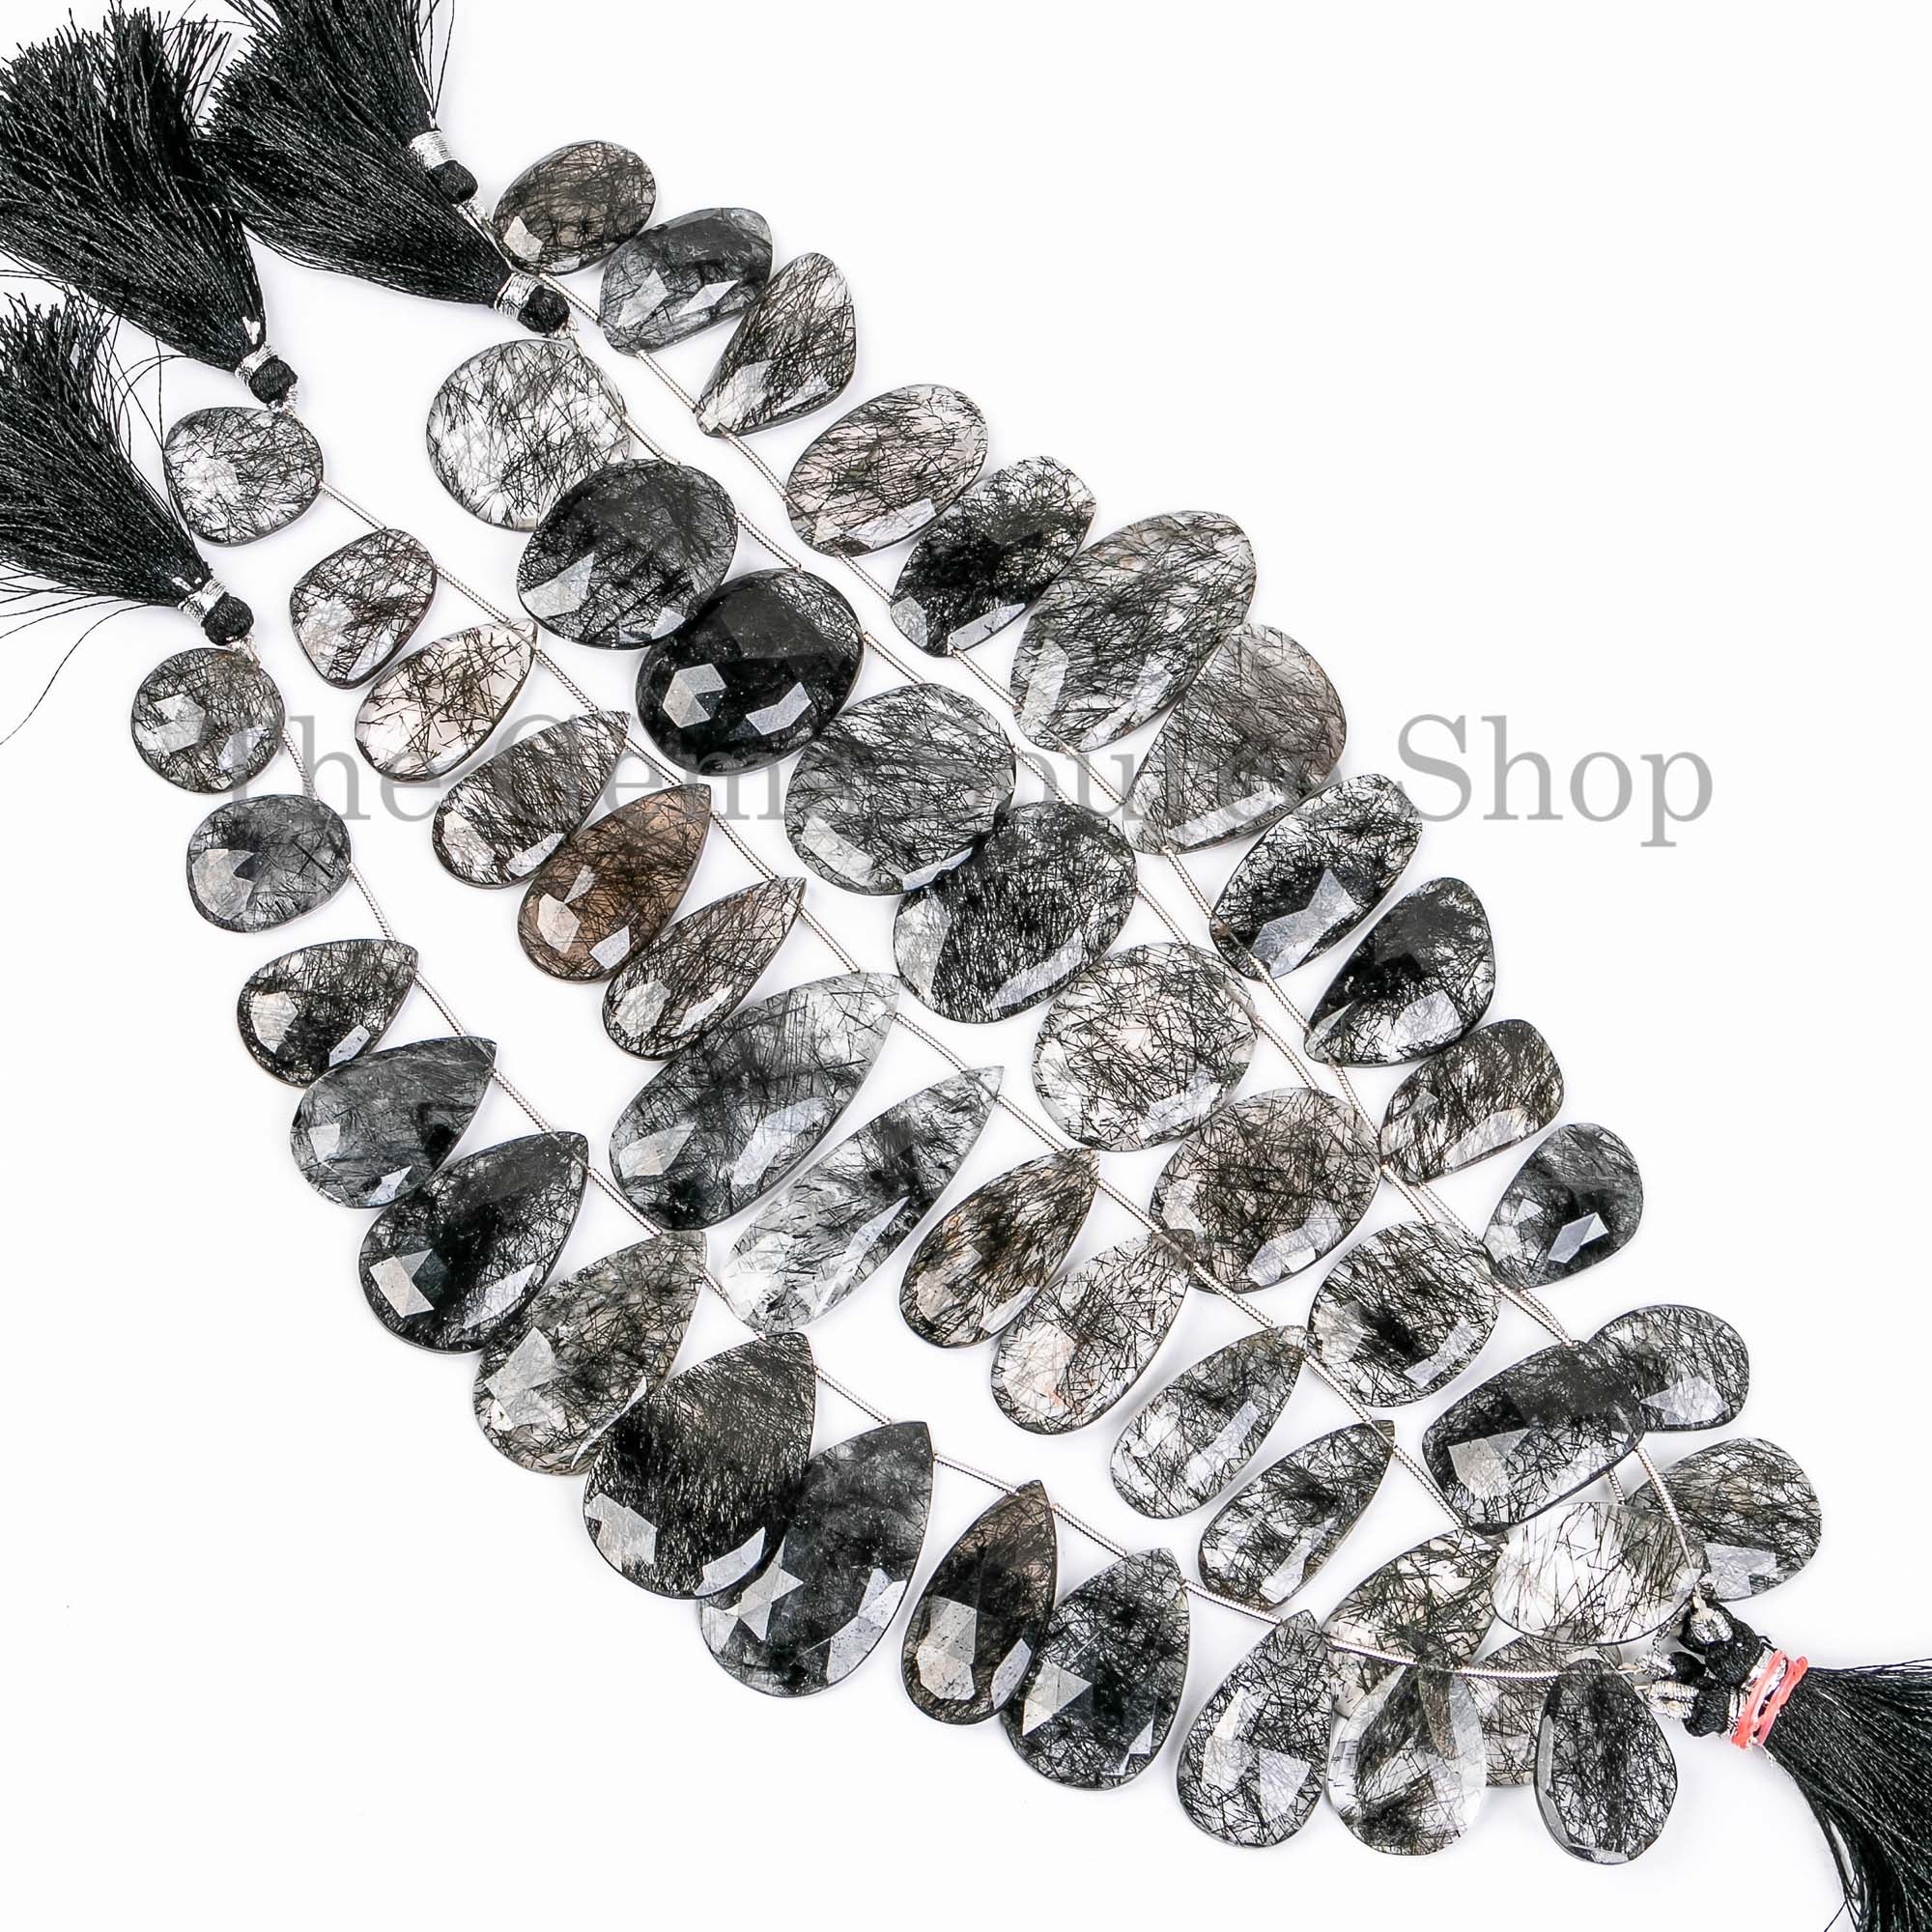 Black Rutile Flat Polki Cut Beads, Black Rutile Fancy Beads, Faceted Beads